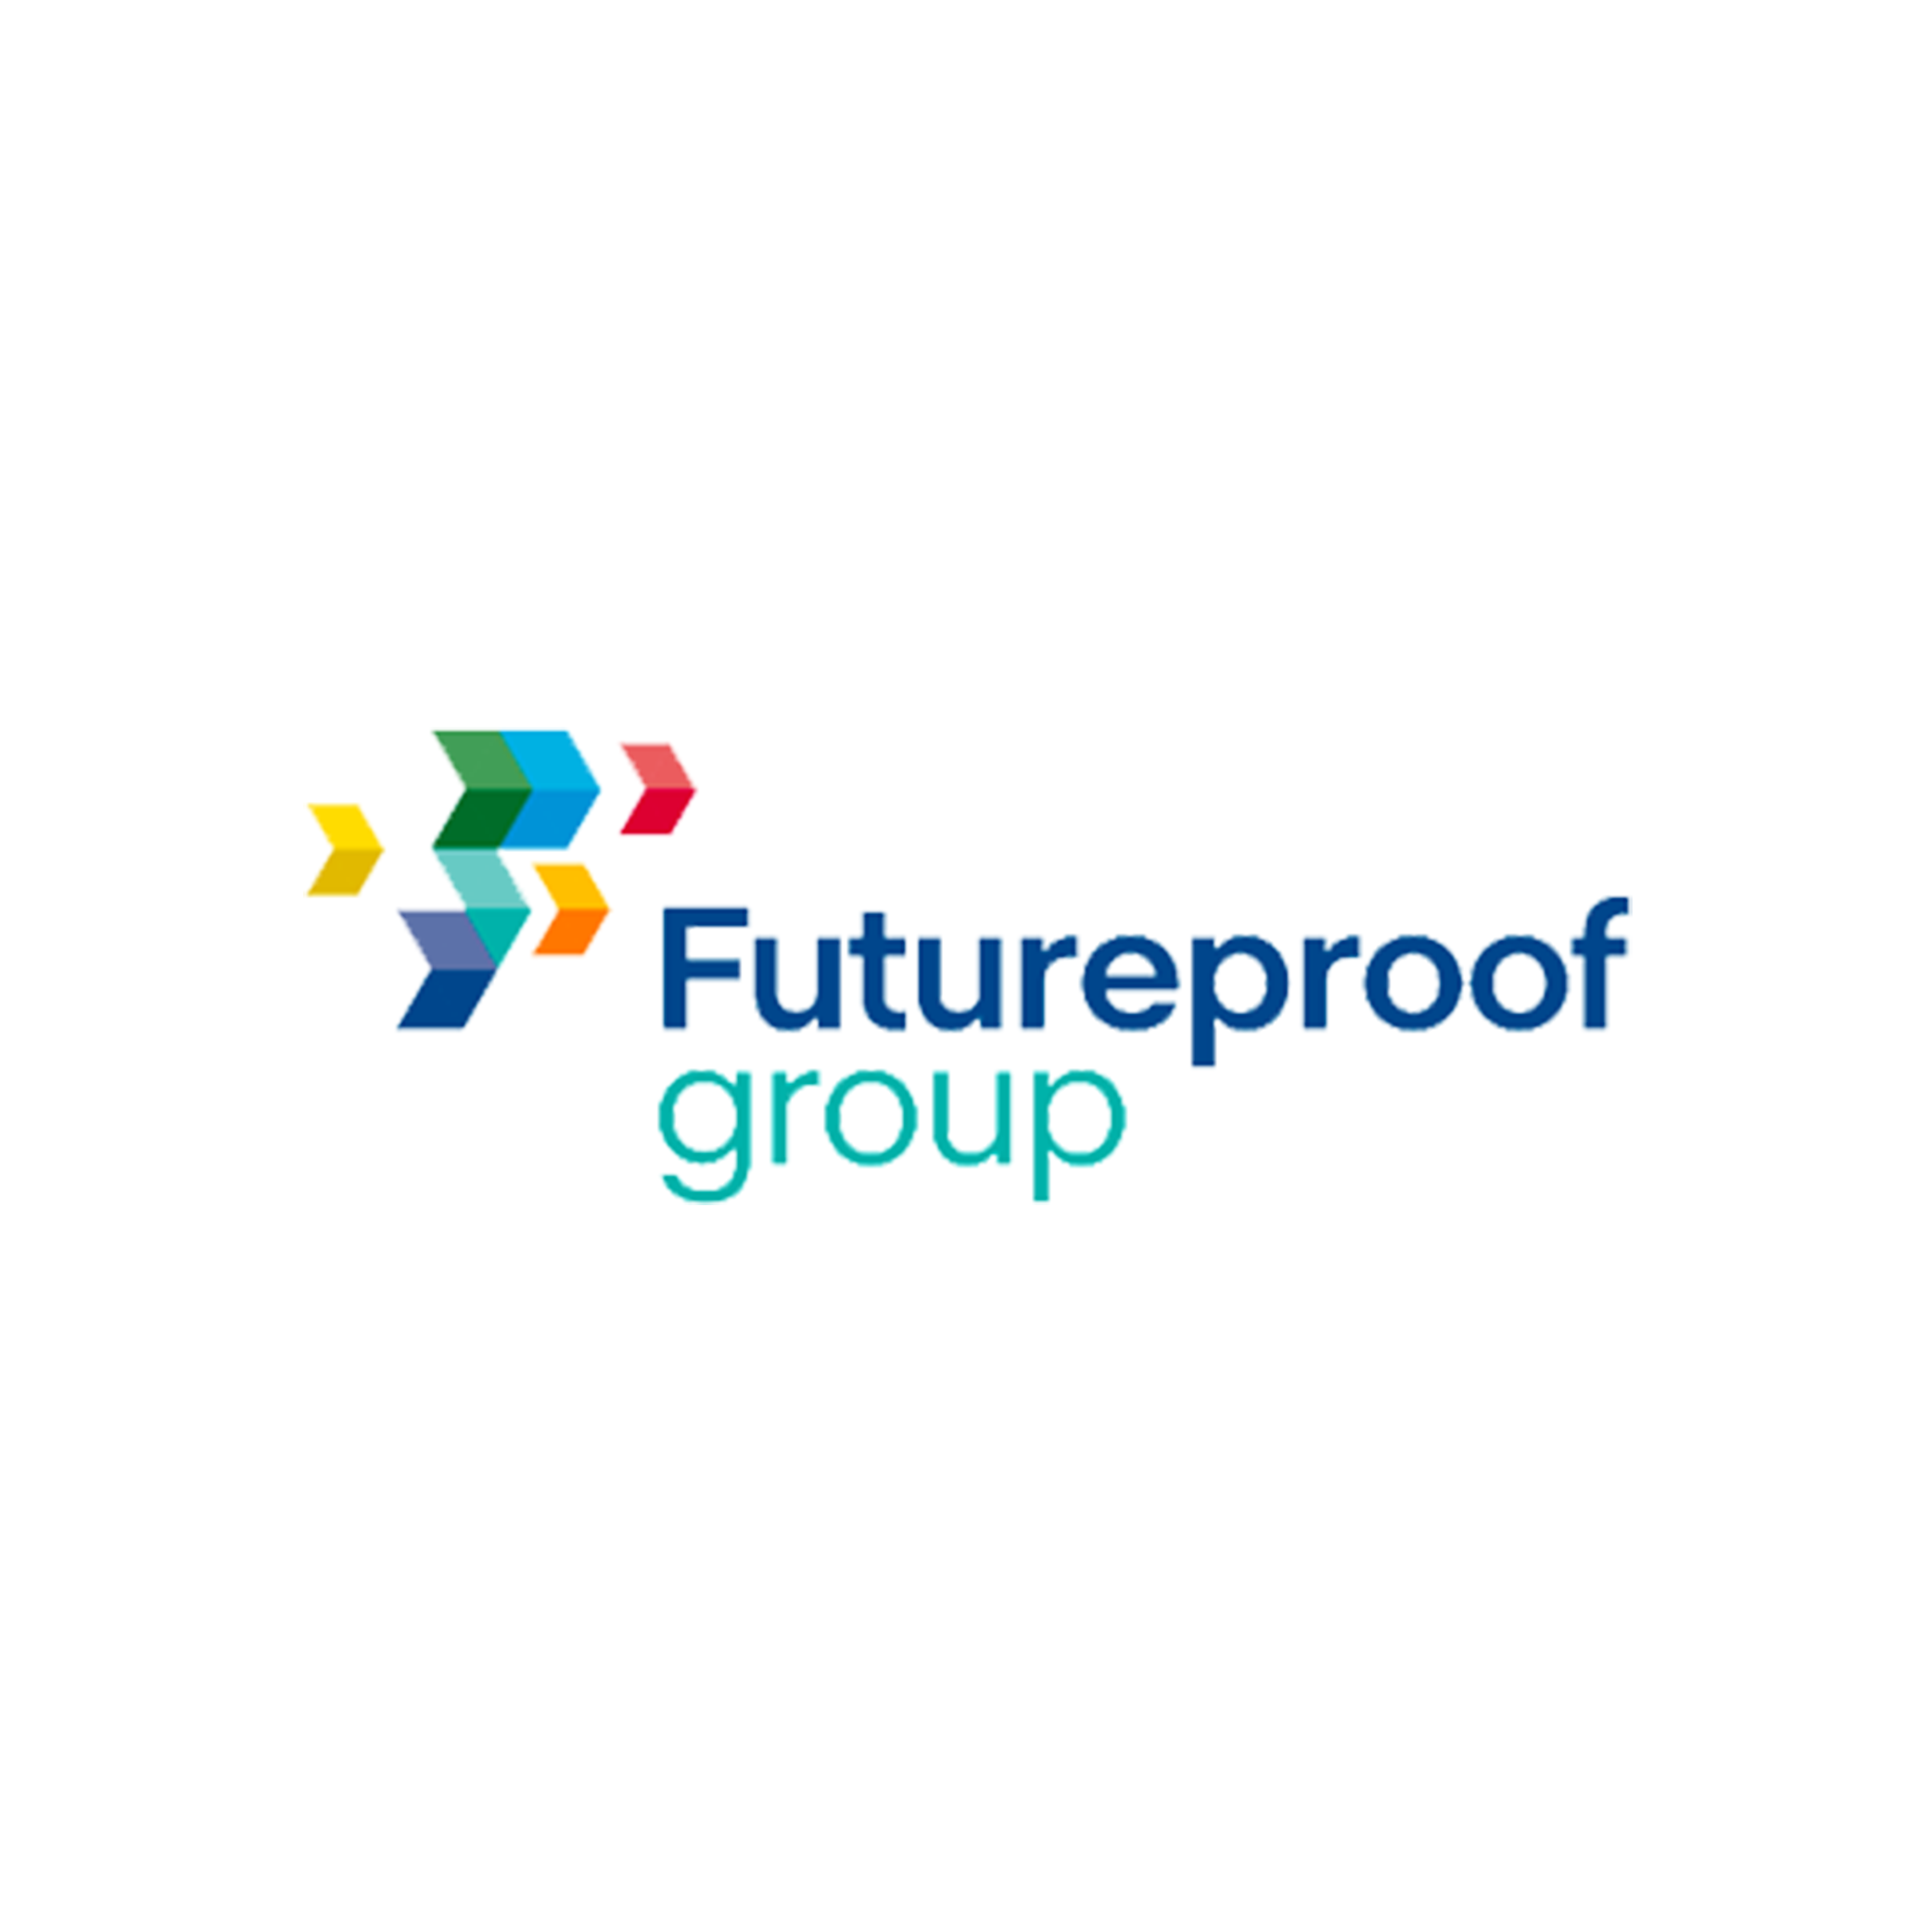 Futureproof group